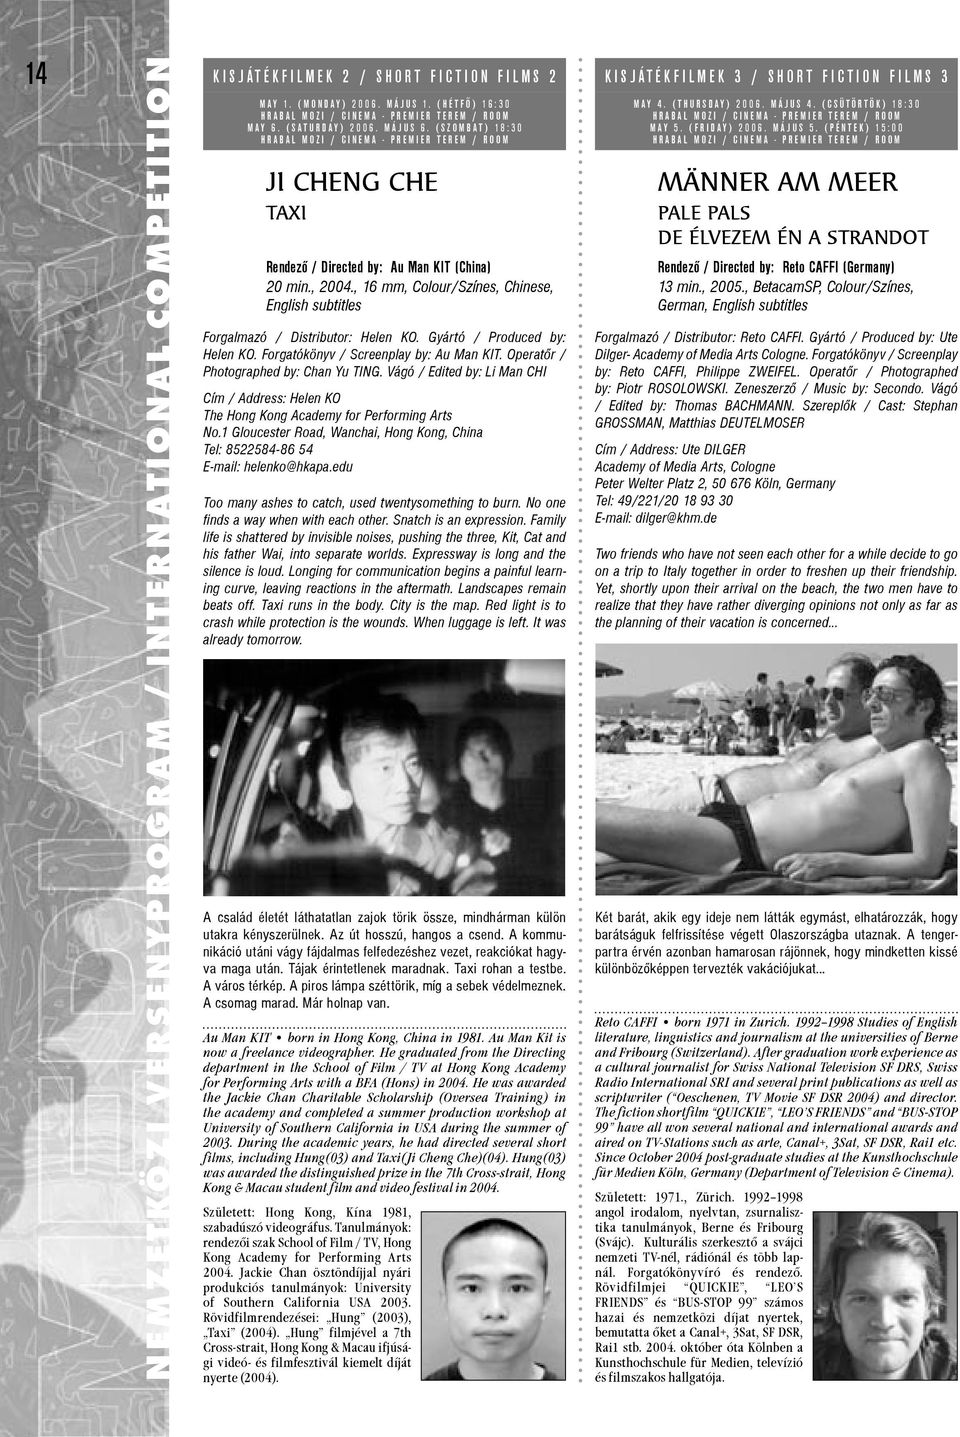 , 16 mm, Colour/Színes, Chinese, English subtitles Forgalmazó / Distributor: Helen KO. Gyártó / Produced by: Helen KO. Forgatókönyv / Screenplay by: Au Man KIT.